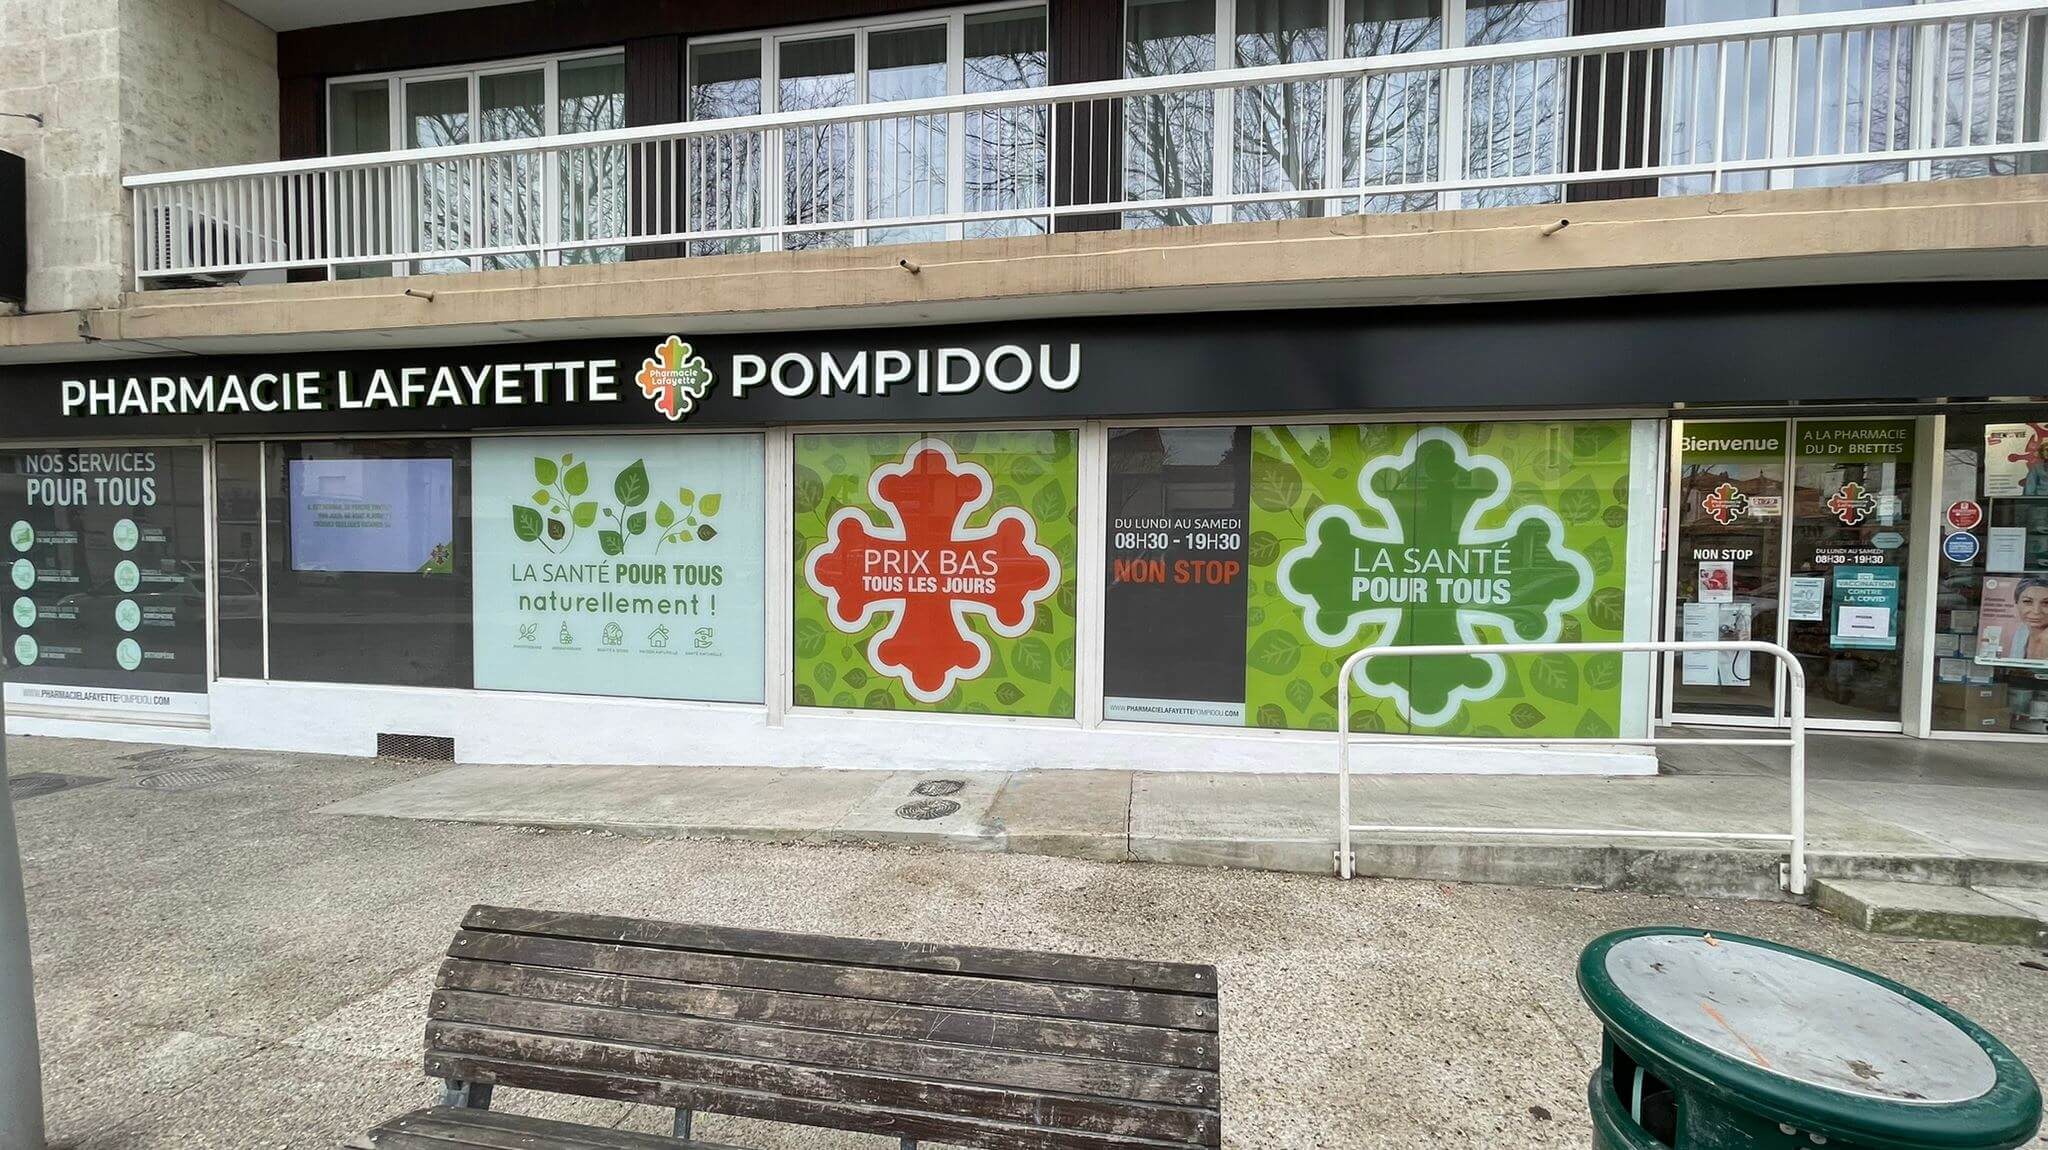 Magasin Pharmacie Lafayette Pompidou - Nîmes (30900) Visuel 1